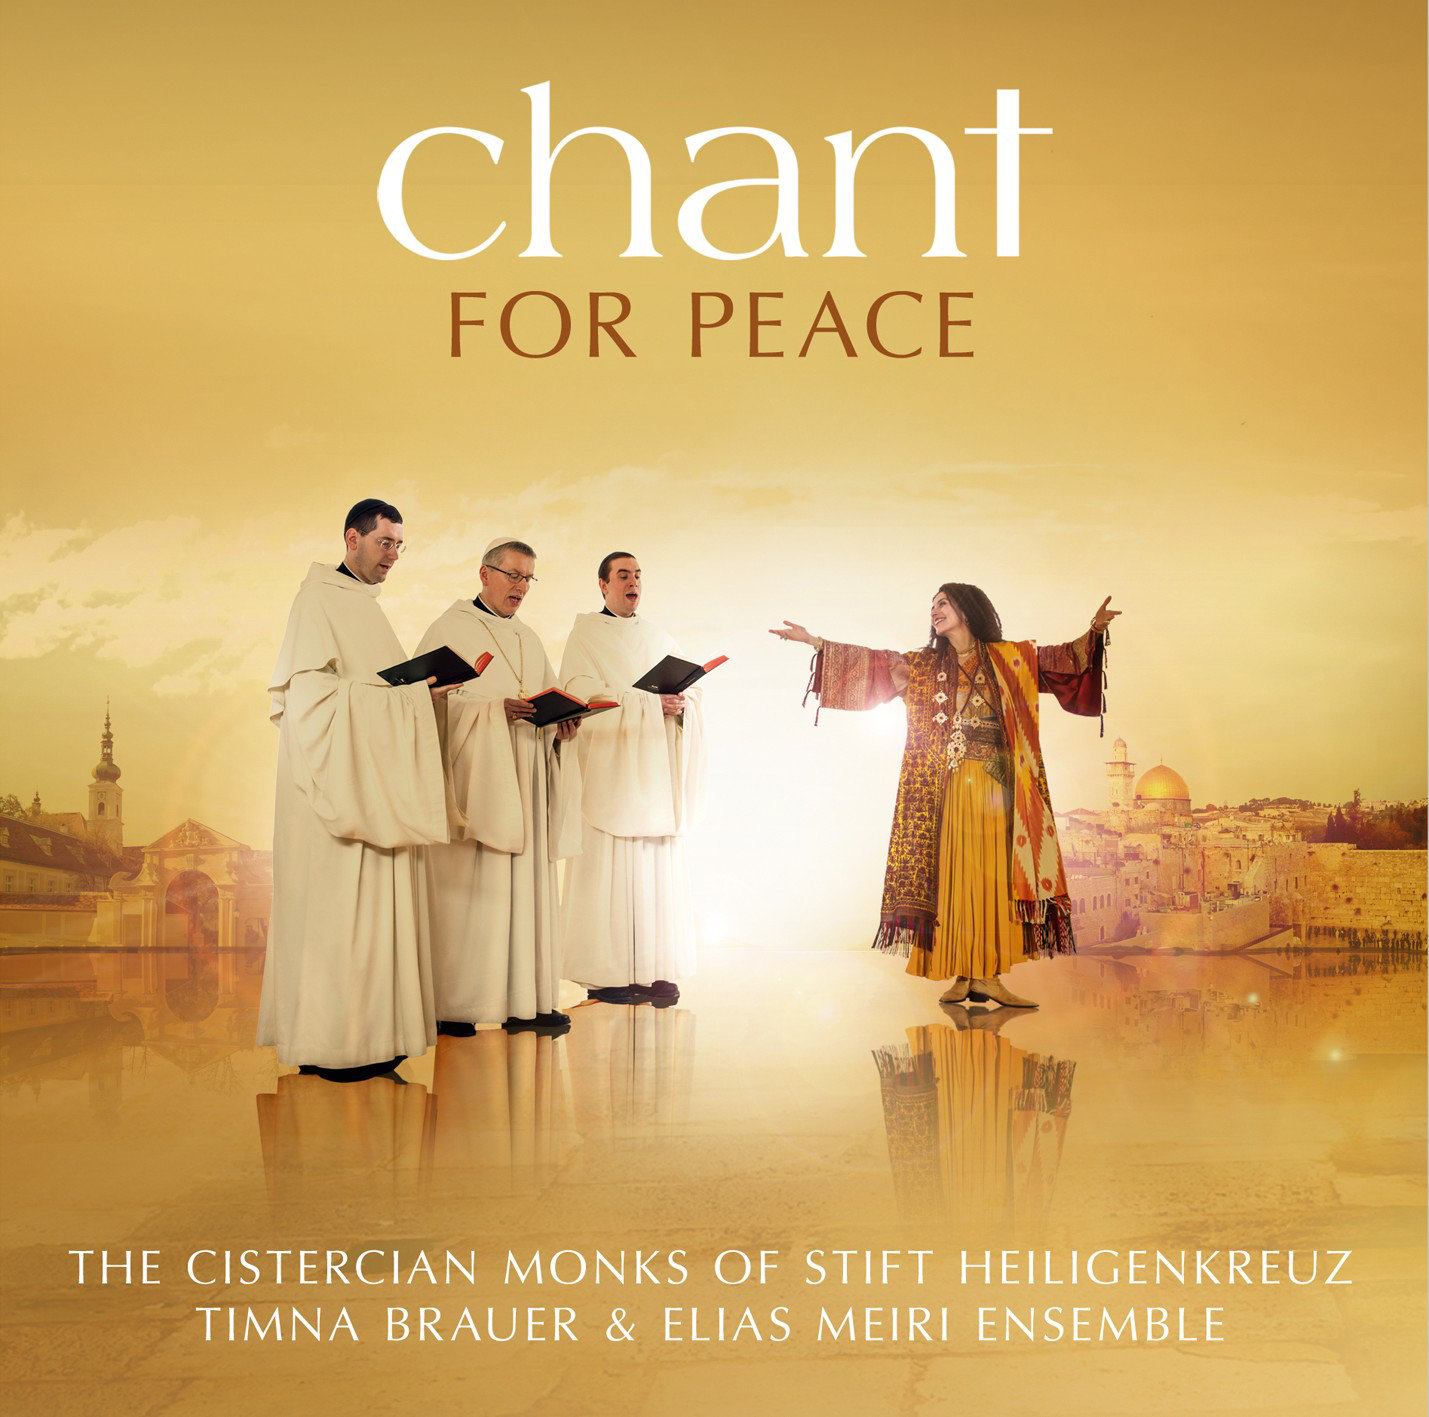 Chant for Peace: The Cistercian Monks of Stift Heiligenkreuz Timna Brauer & Elias Meiri Ensemble